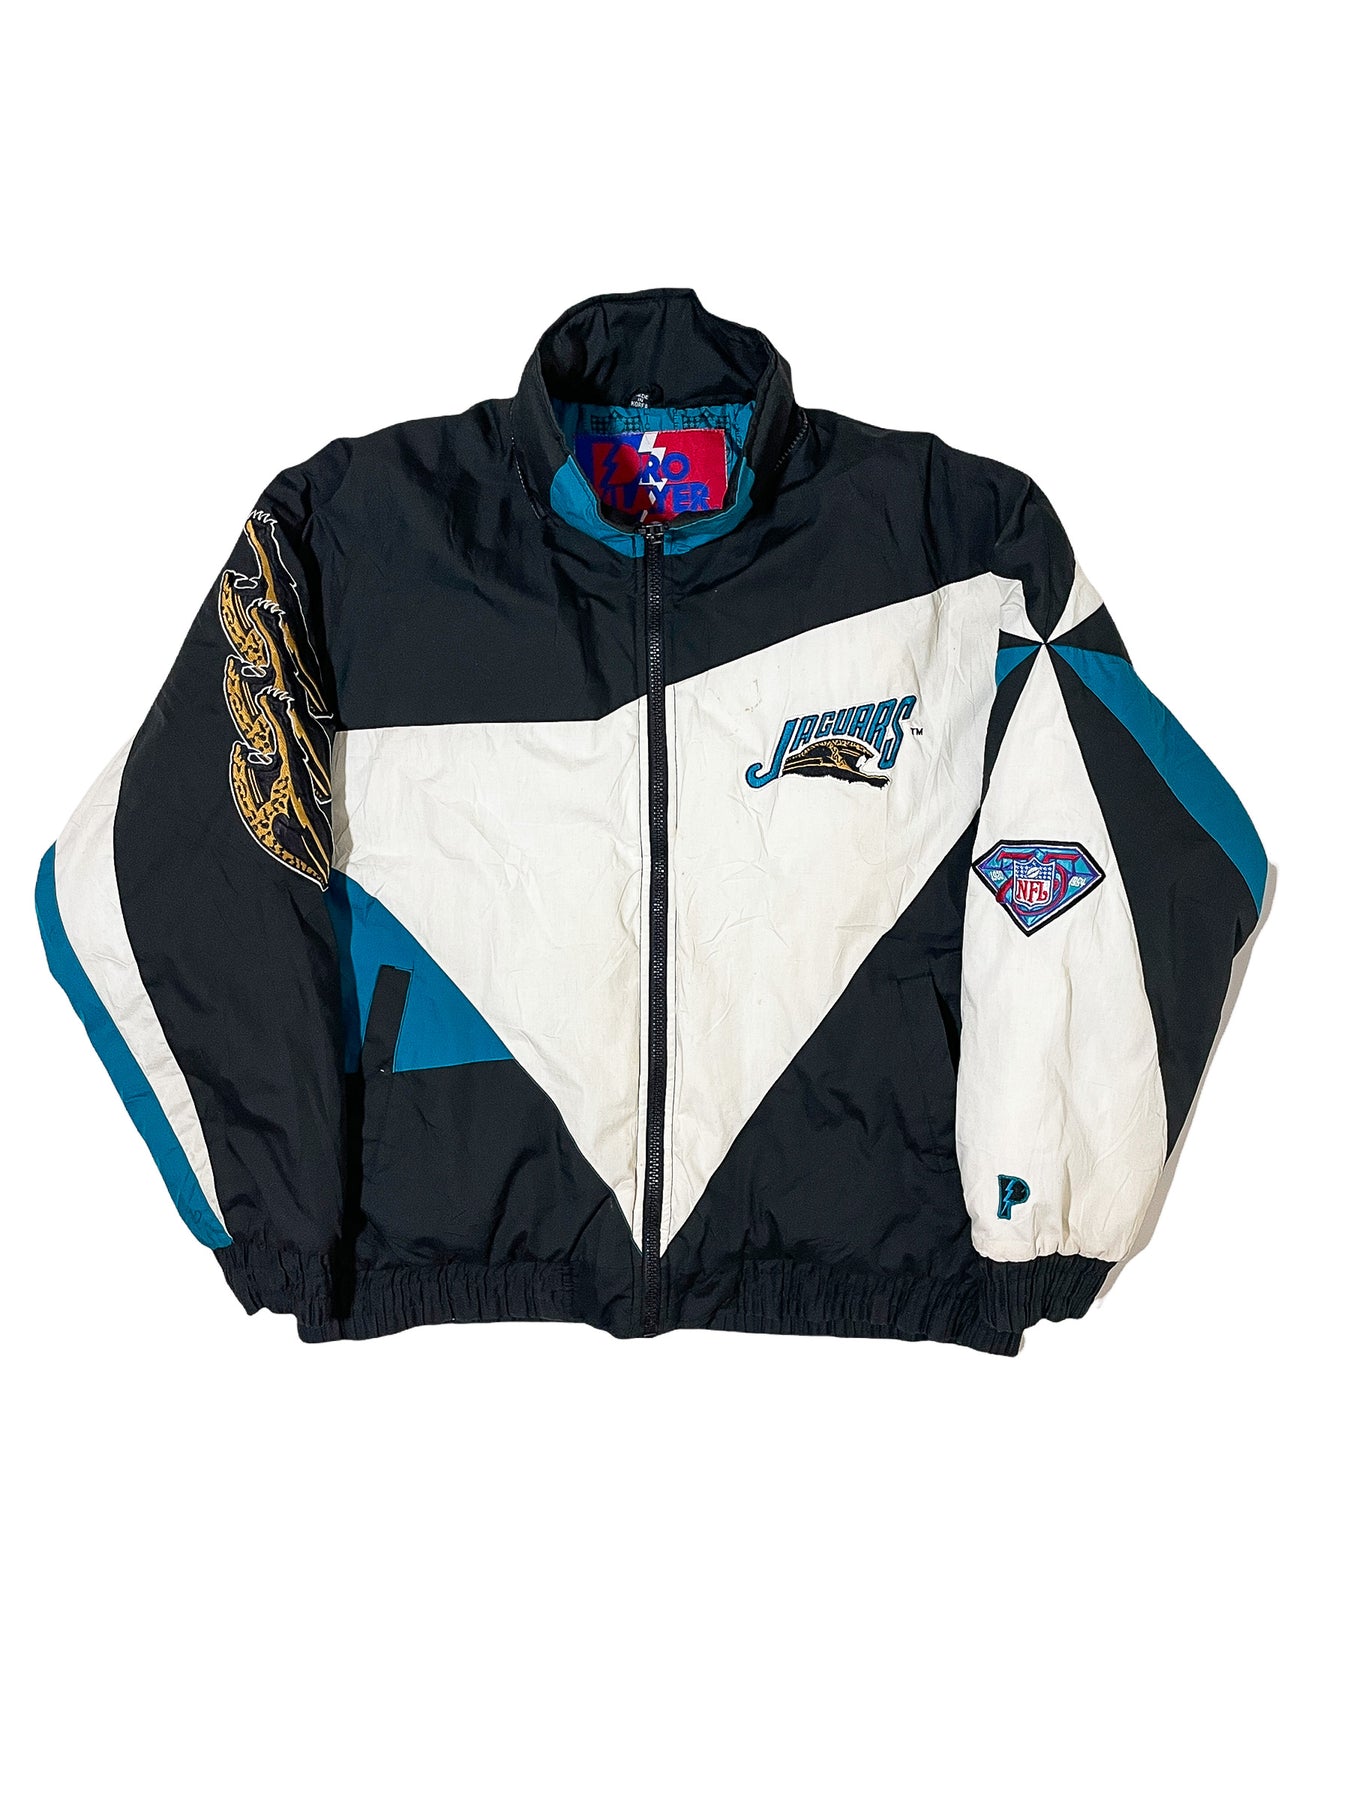 Urban Outfitters Vintage Starter San Jose Sharks Anorak Jacket in